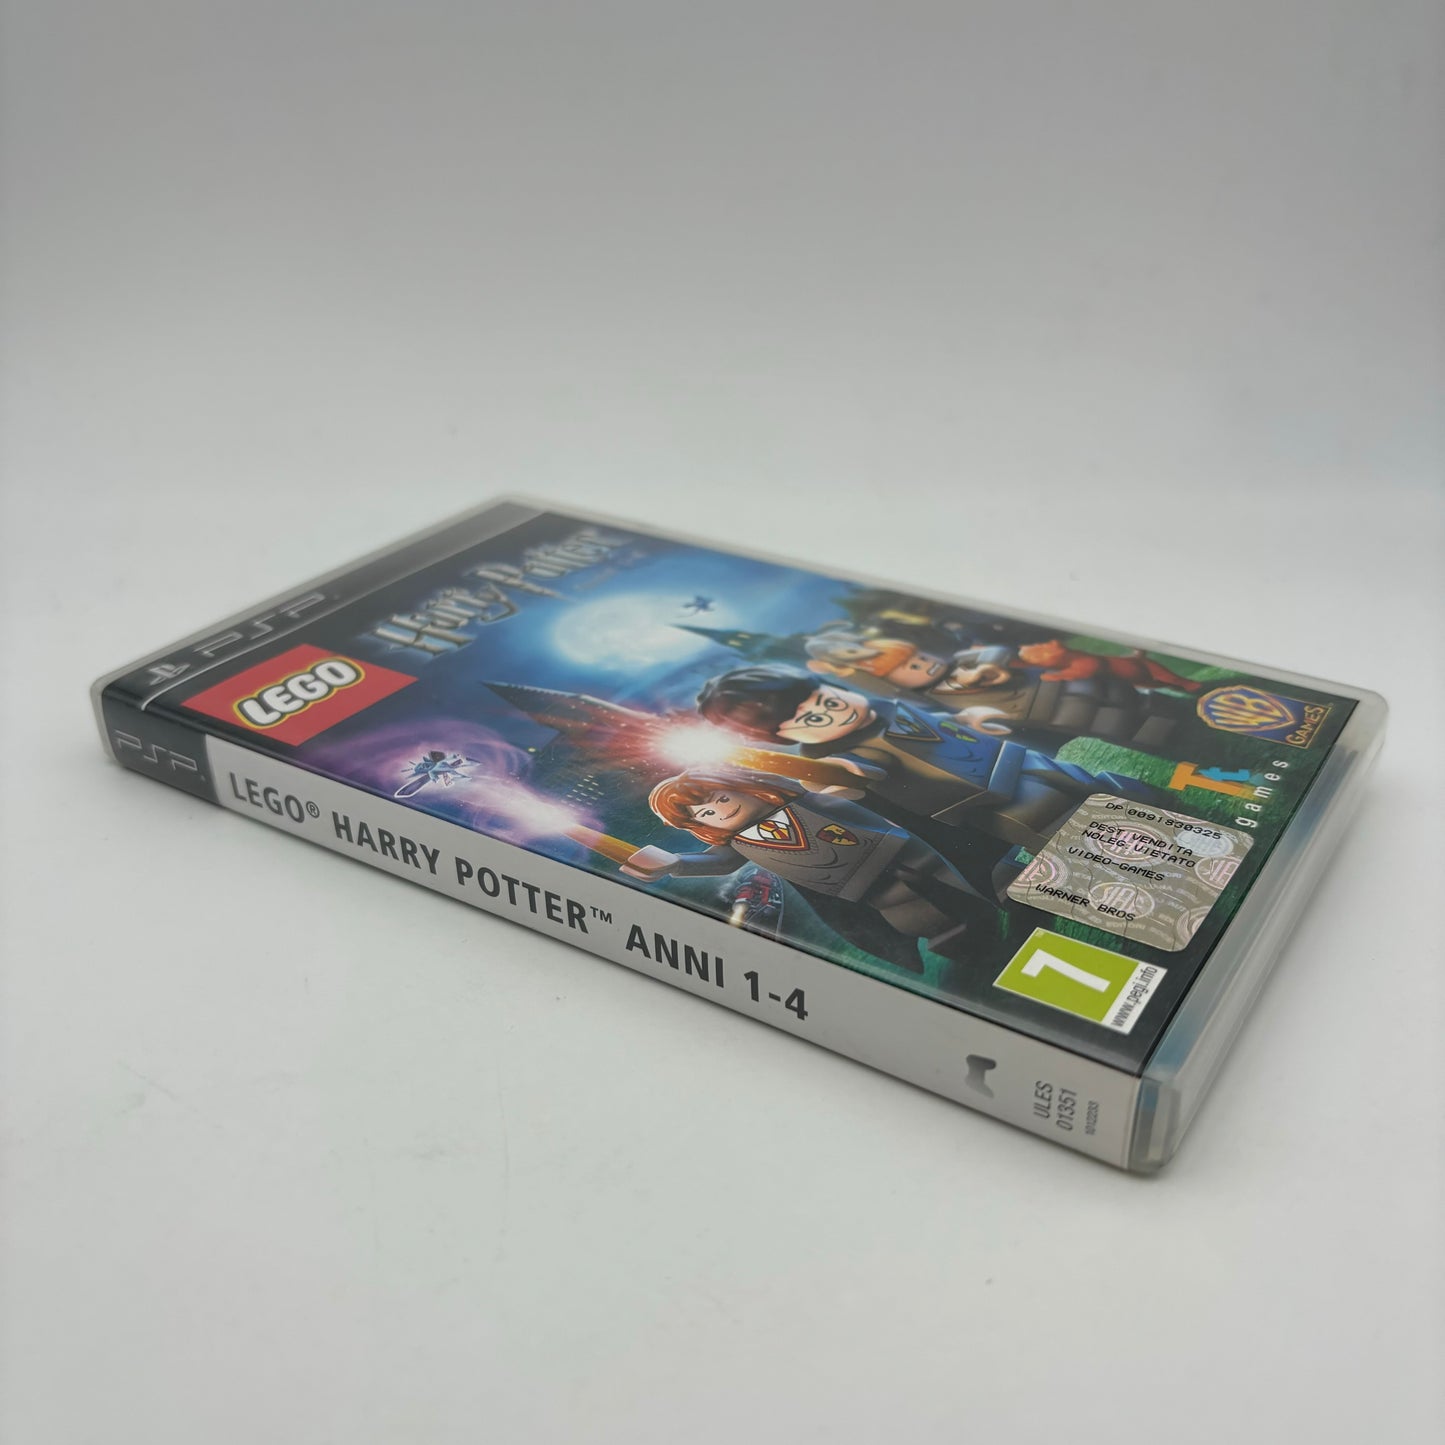 Lego Harry Potter Anni 1-4 PSP PAL ITA (USATO)